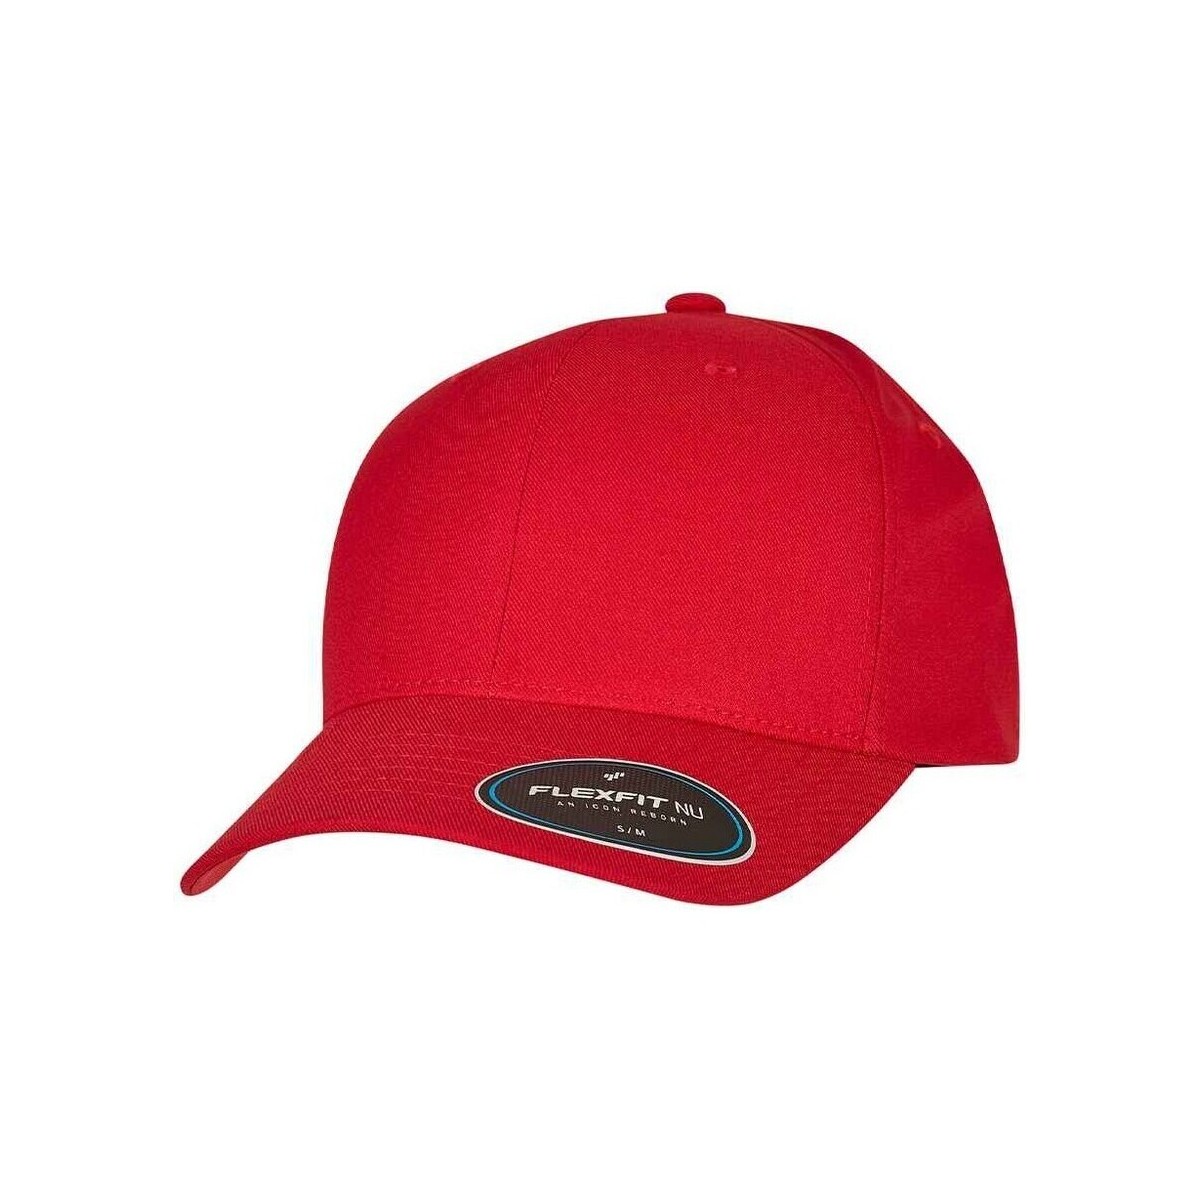 Accessori Cappellini Flexfit NU Rosso